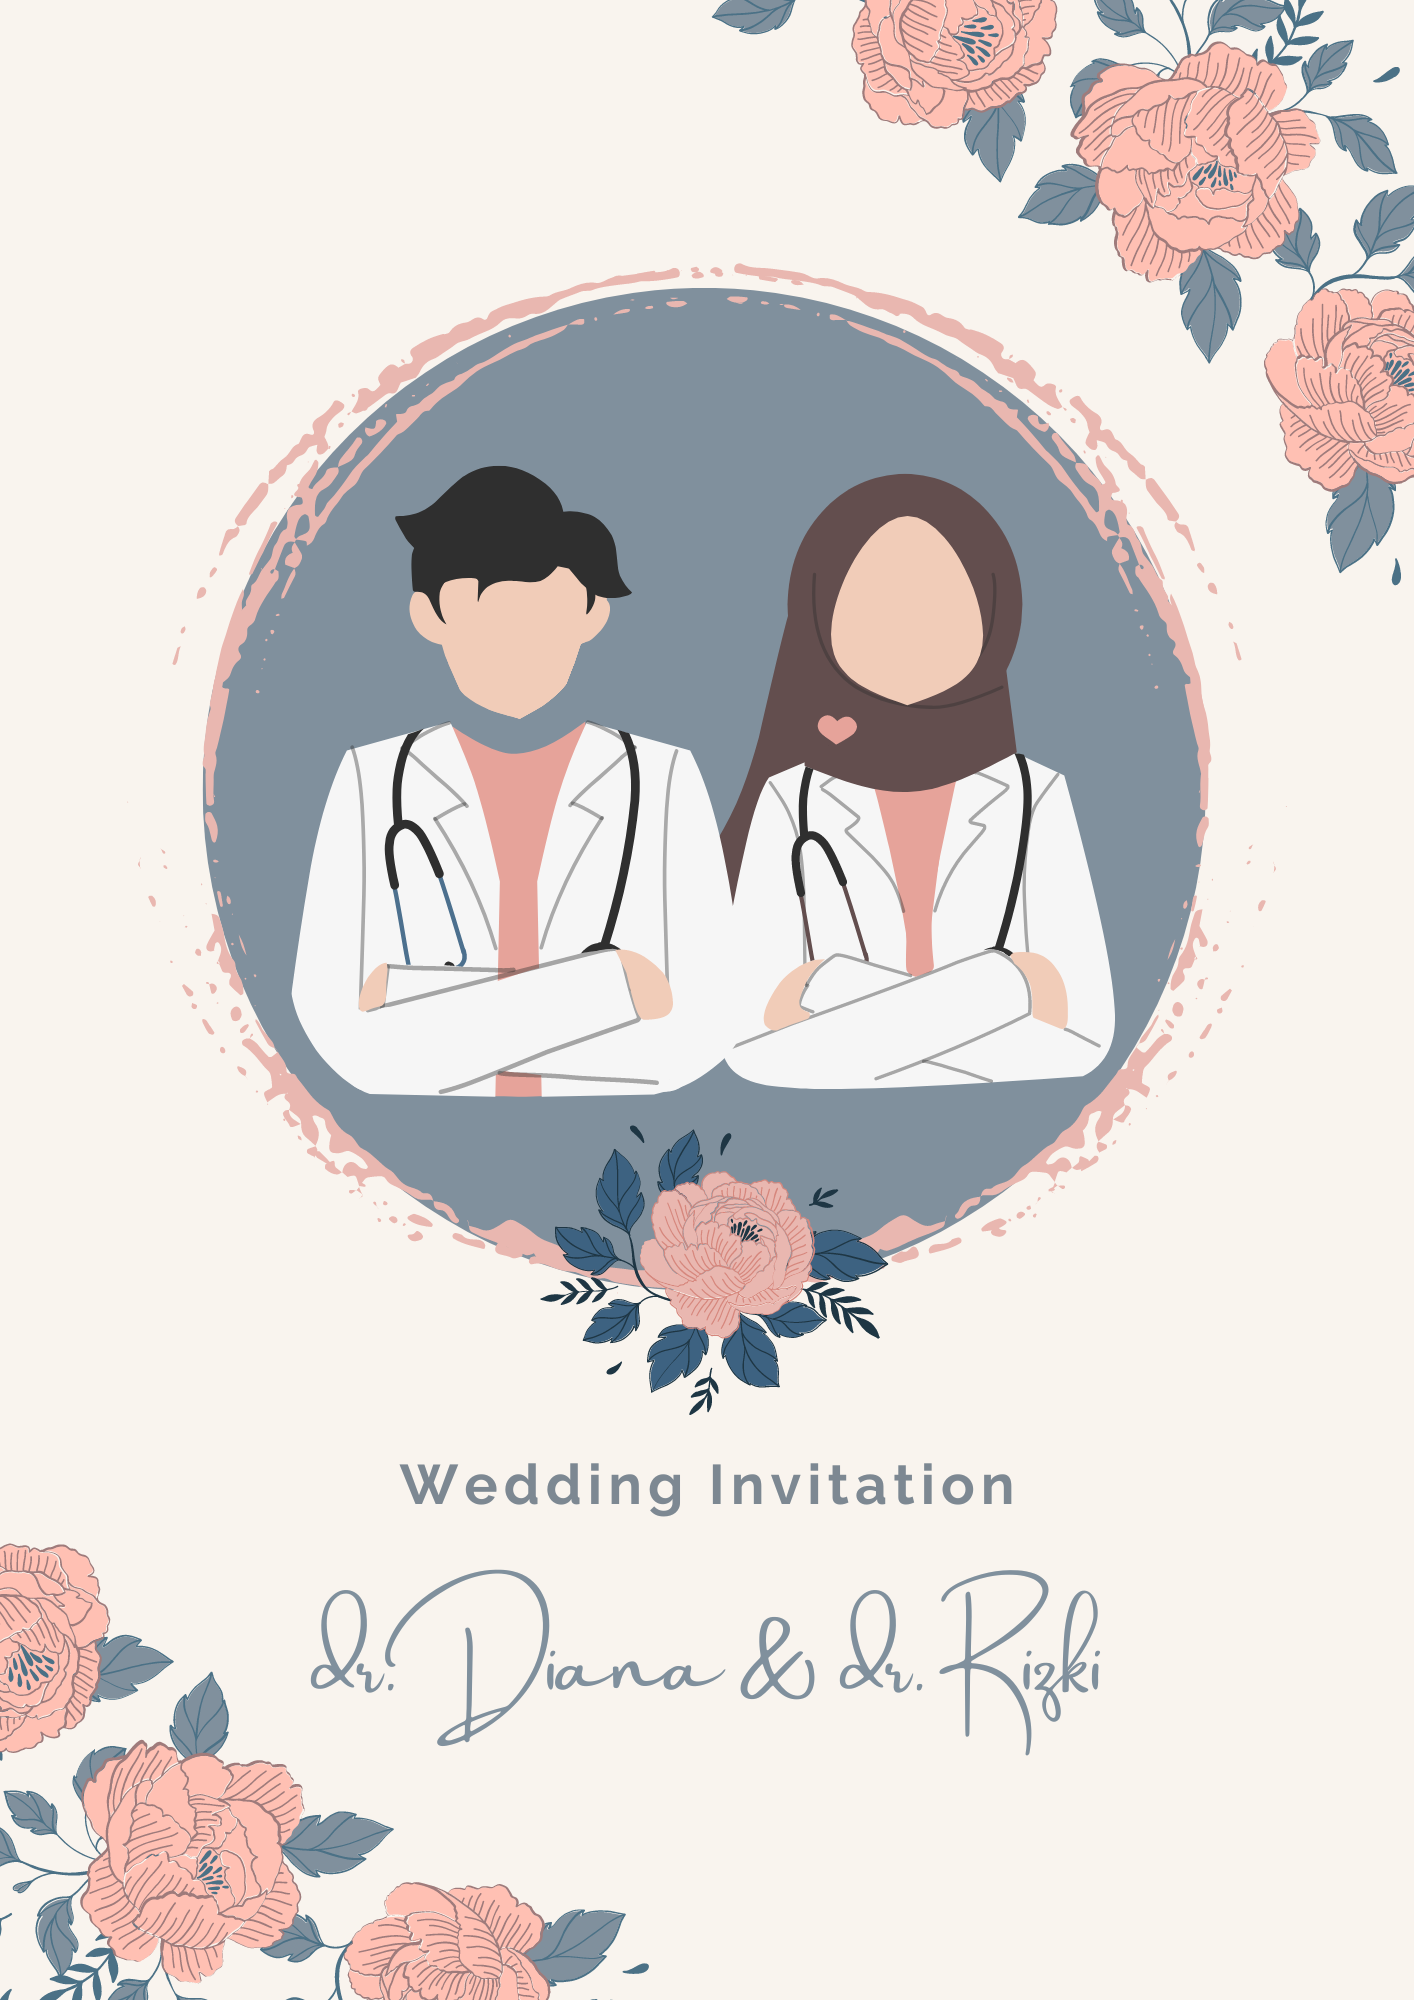 the wedding of dr. Diana & dr. Rizki